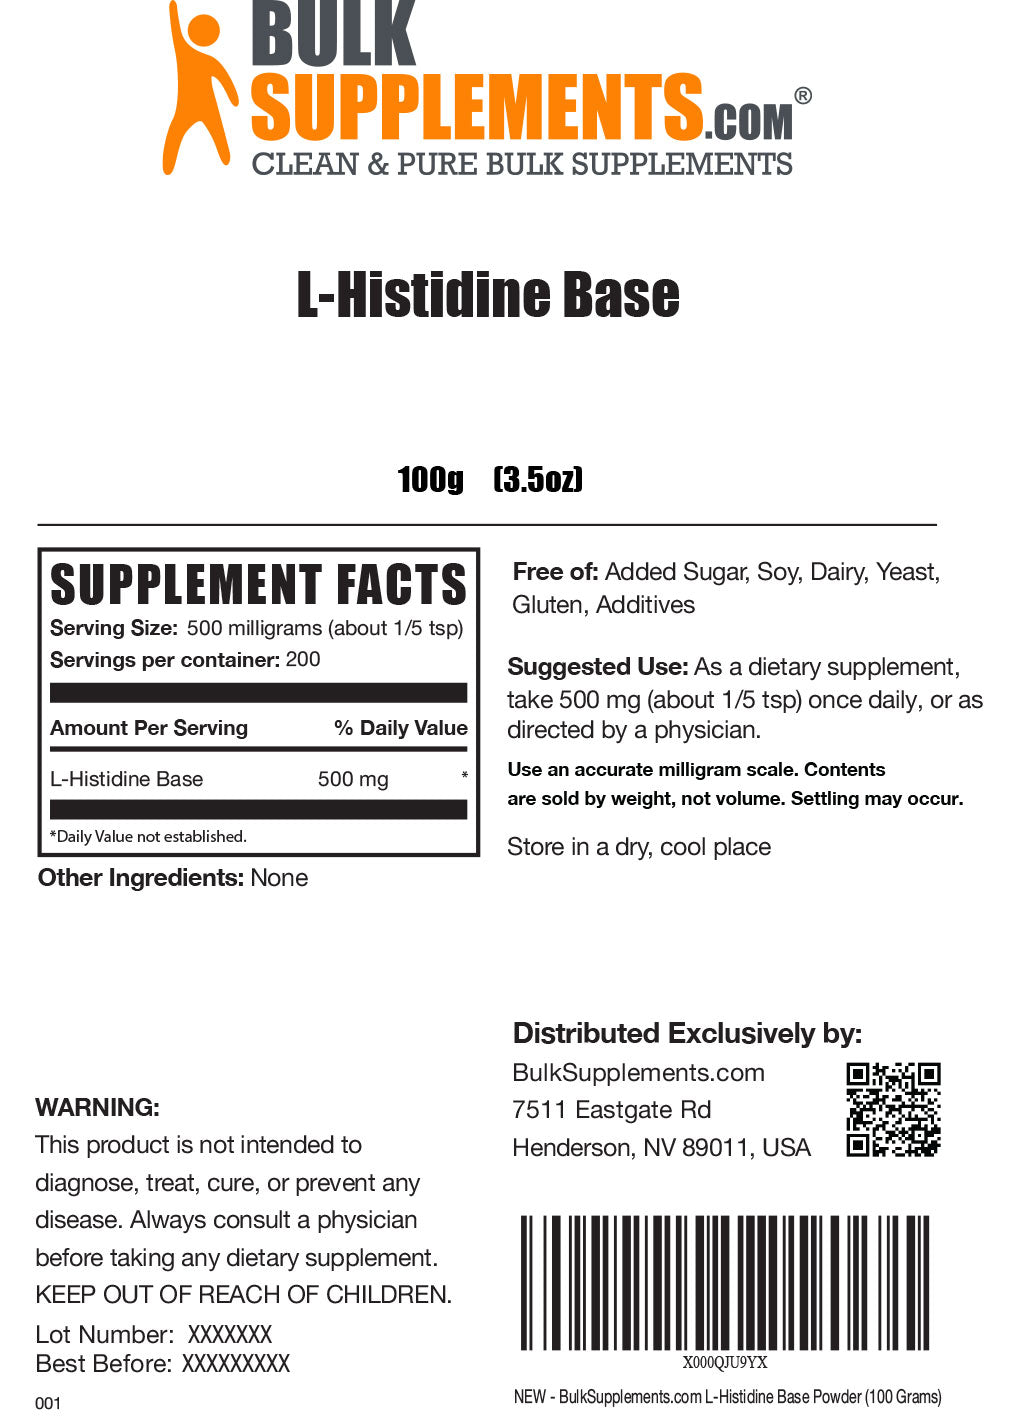 L-Histidine Base powder label 100g